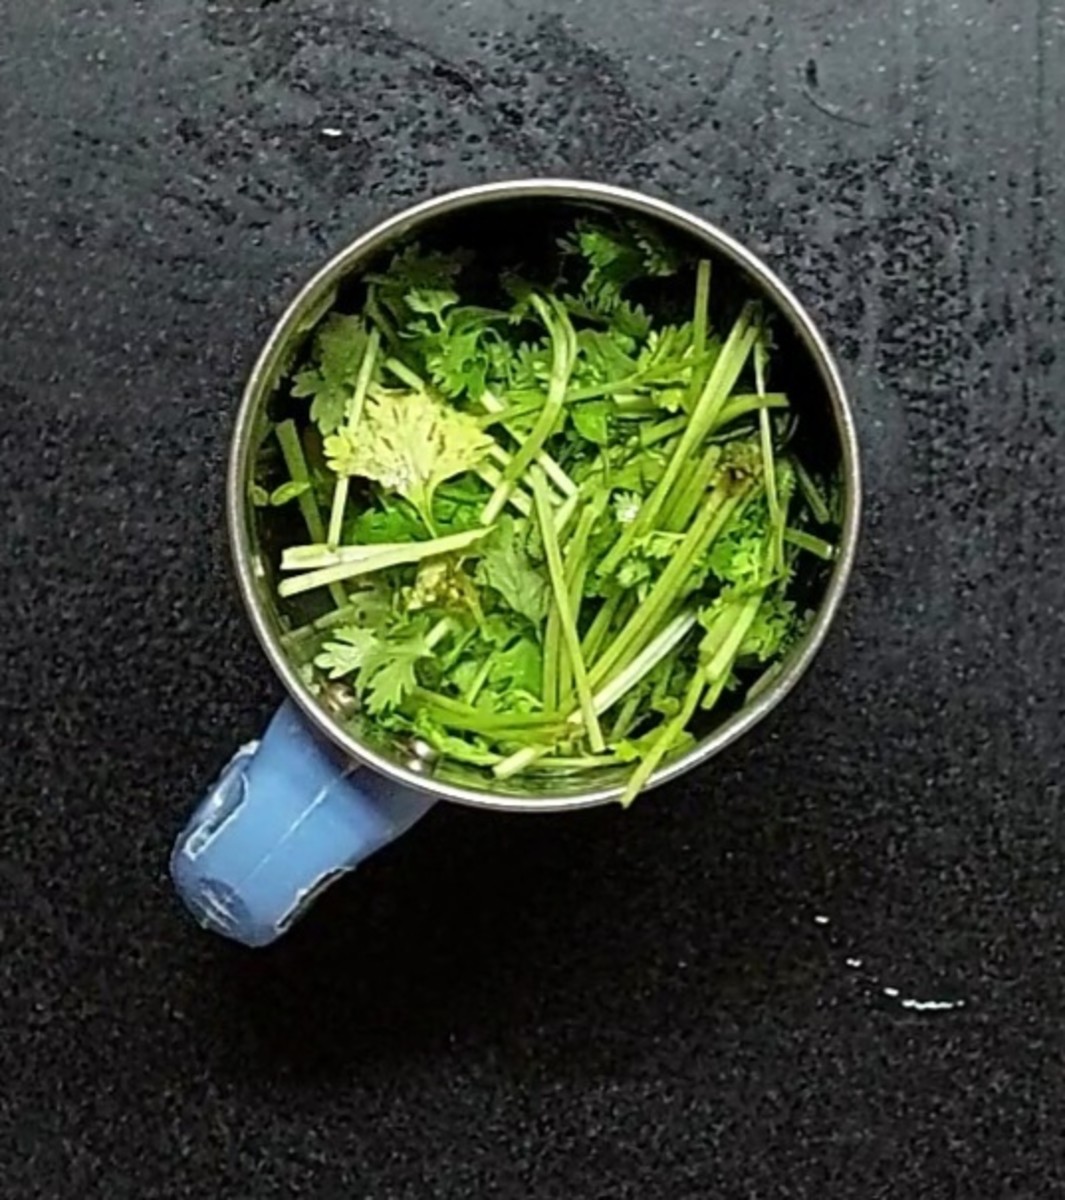 Add 1/2 cup fresh coriander leaves.